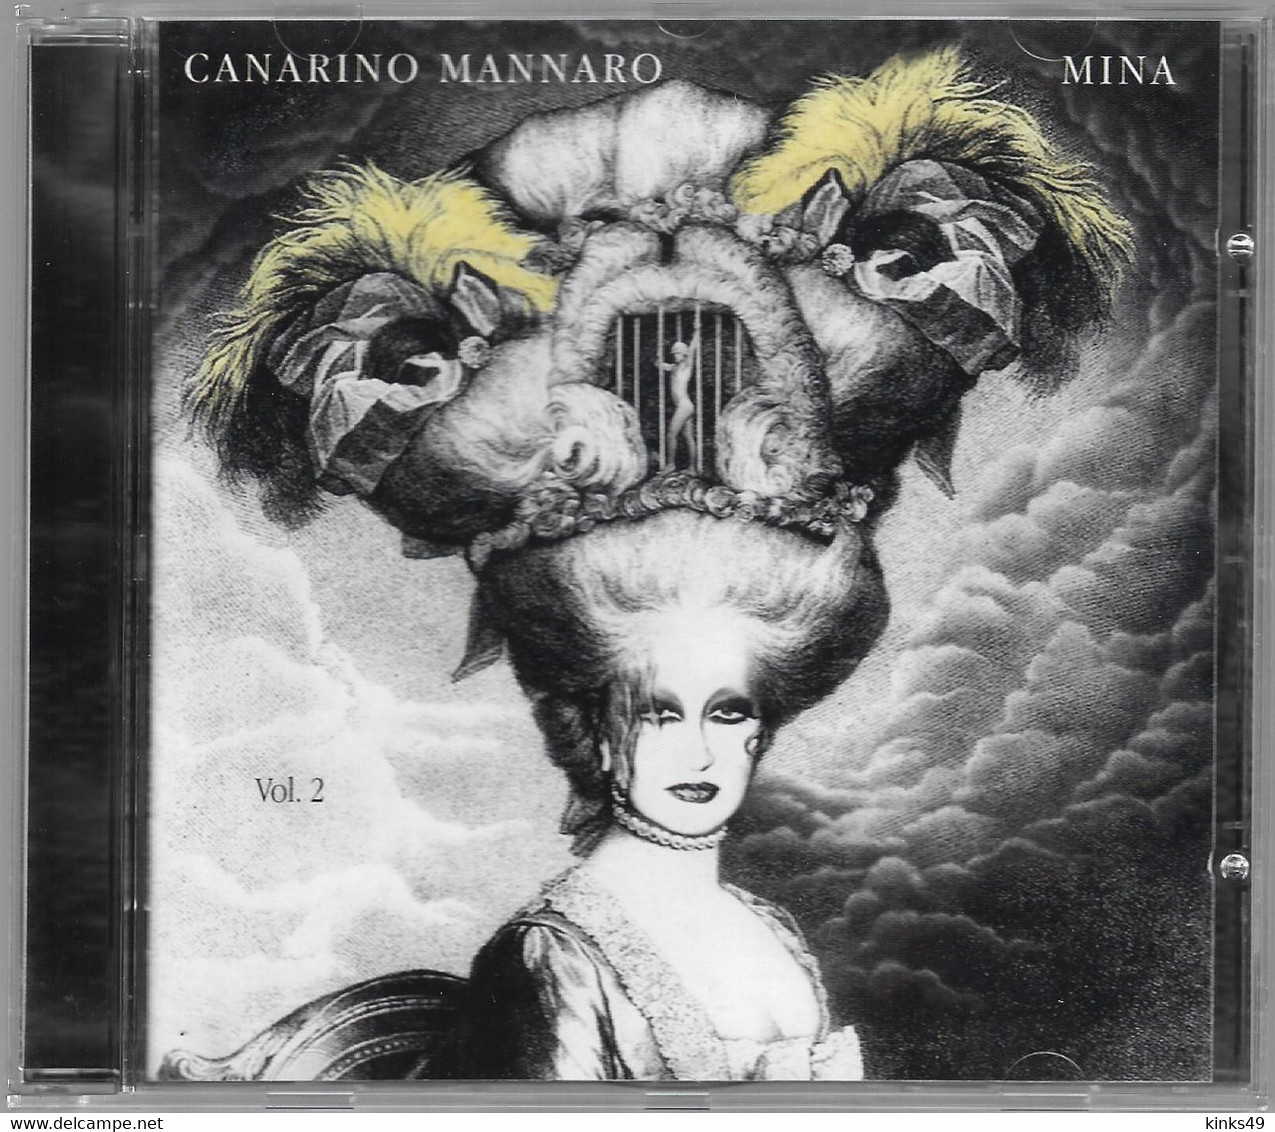 MINA : CD < Canarino Mannaro Volume 2 > / PDU / 1998 - Other - Italian Music